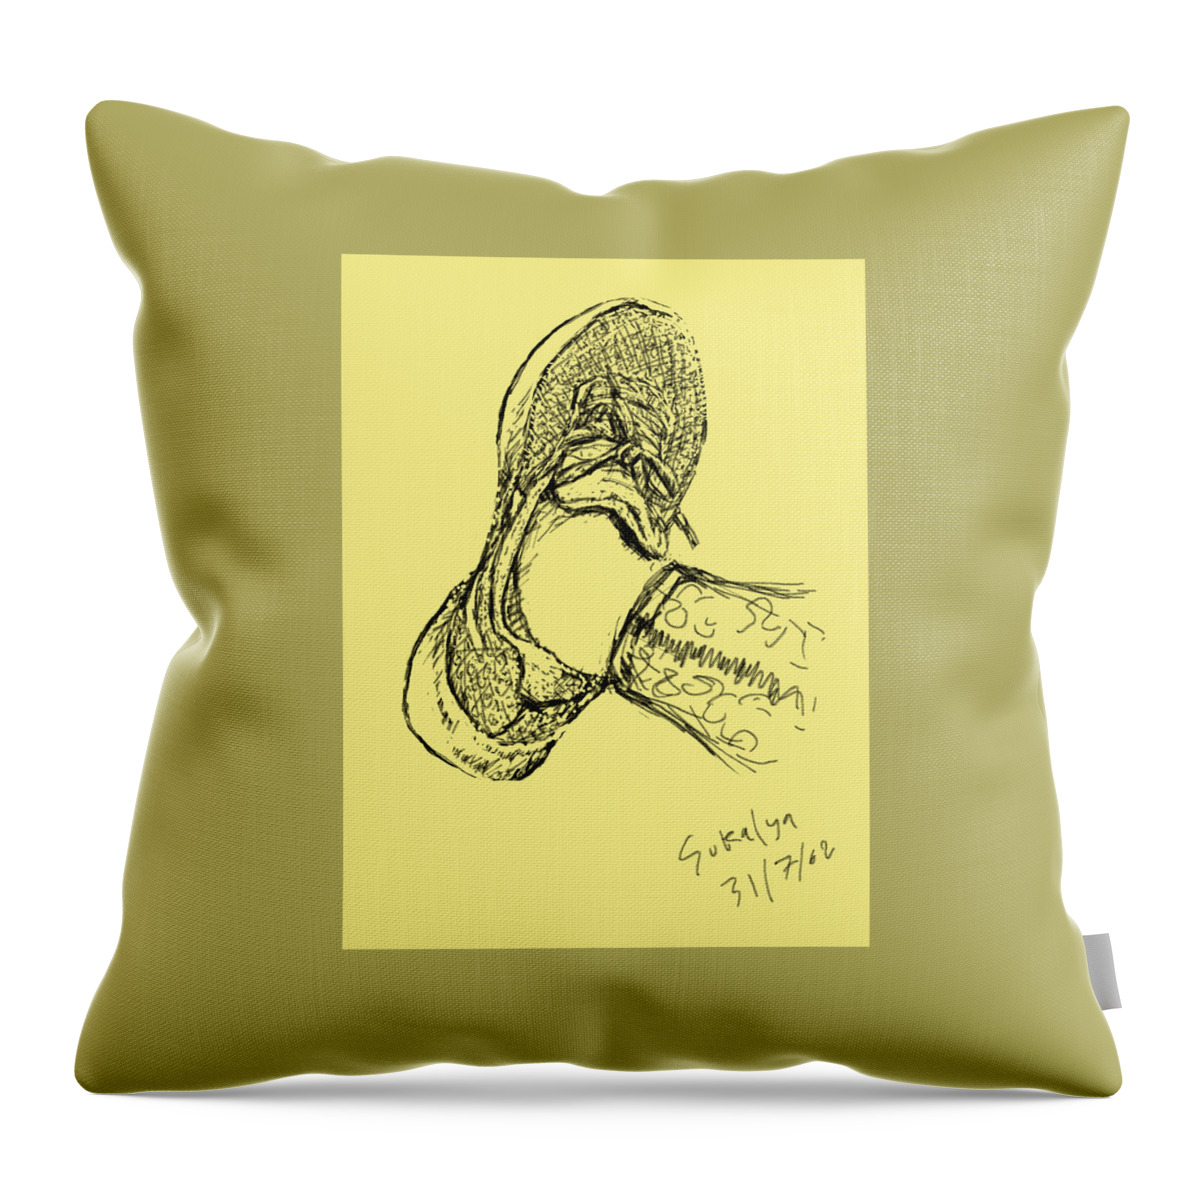 Foot Throw Pillow featuring the digital art Sixth by Sukalya Chearanantana